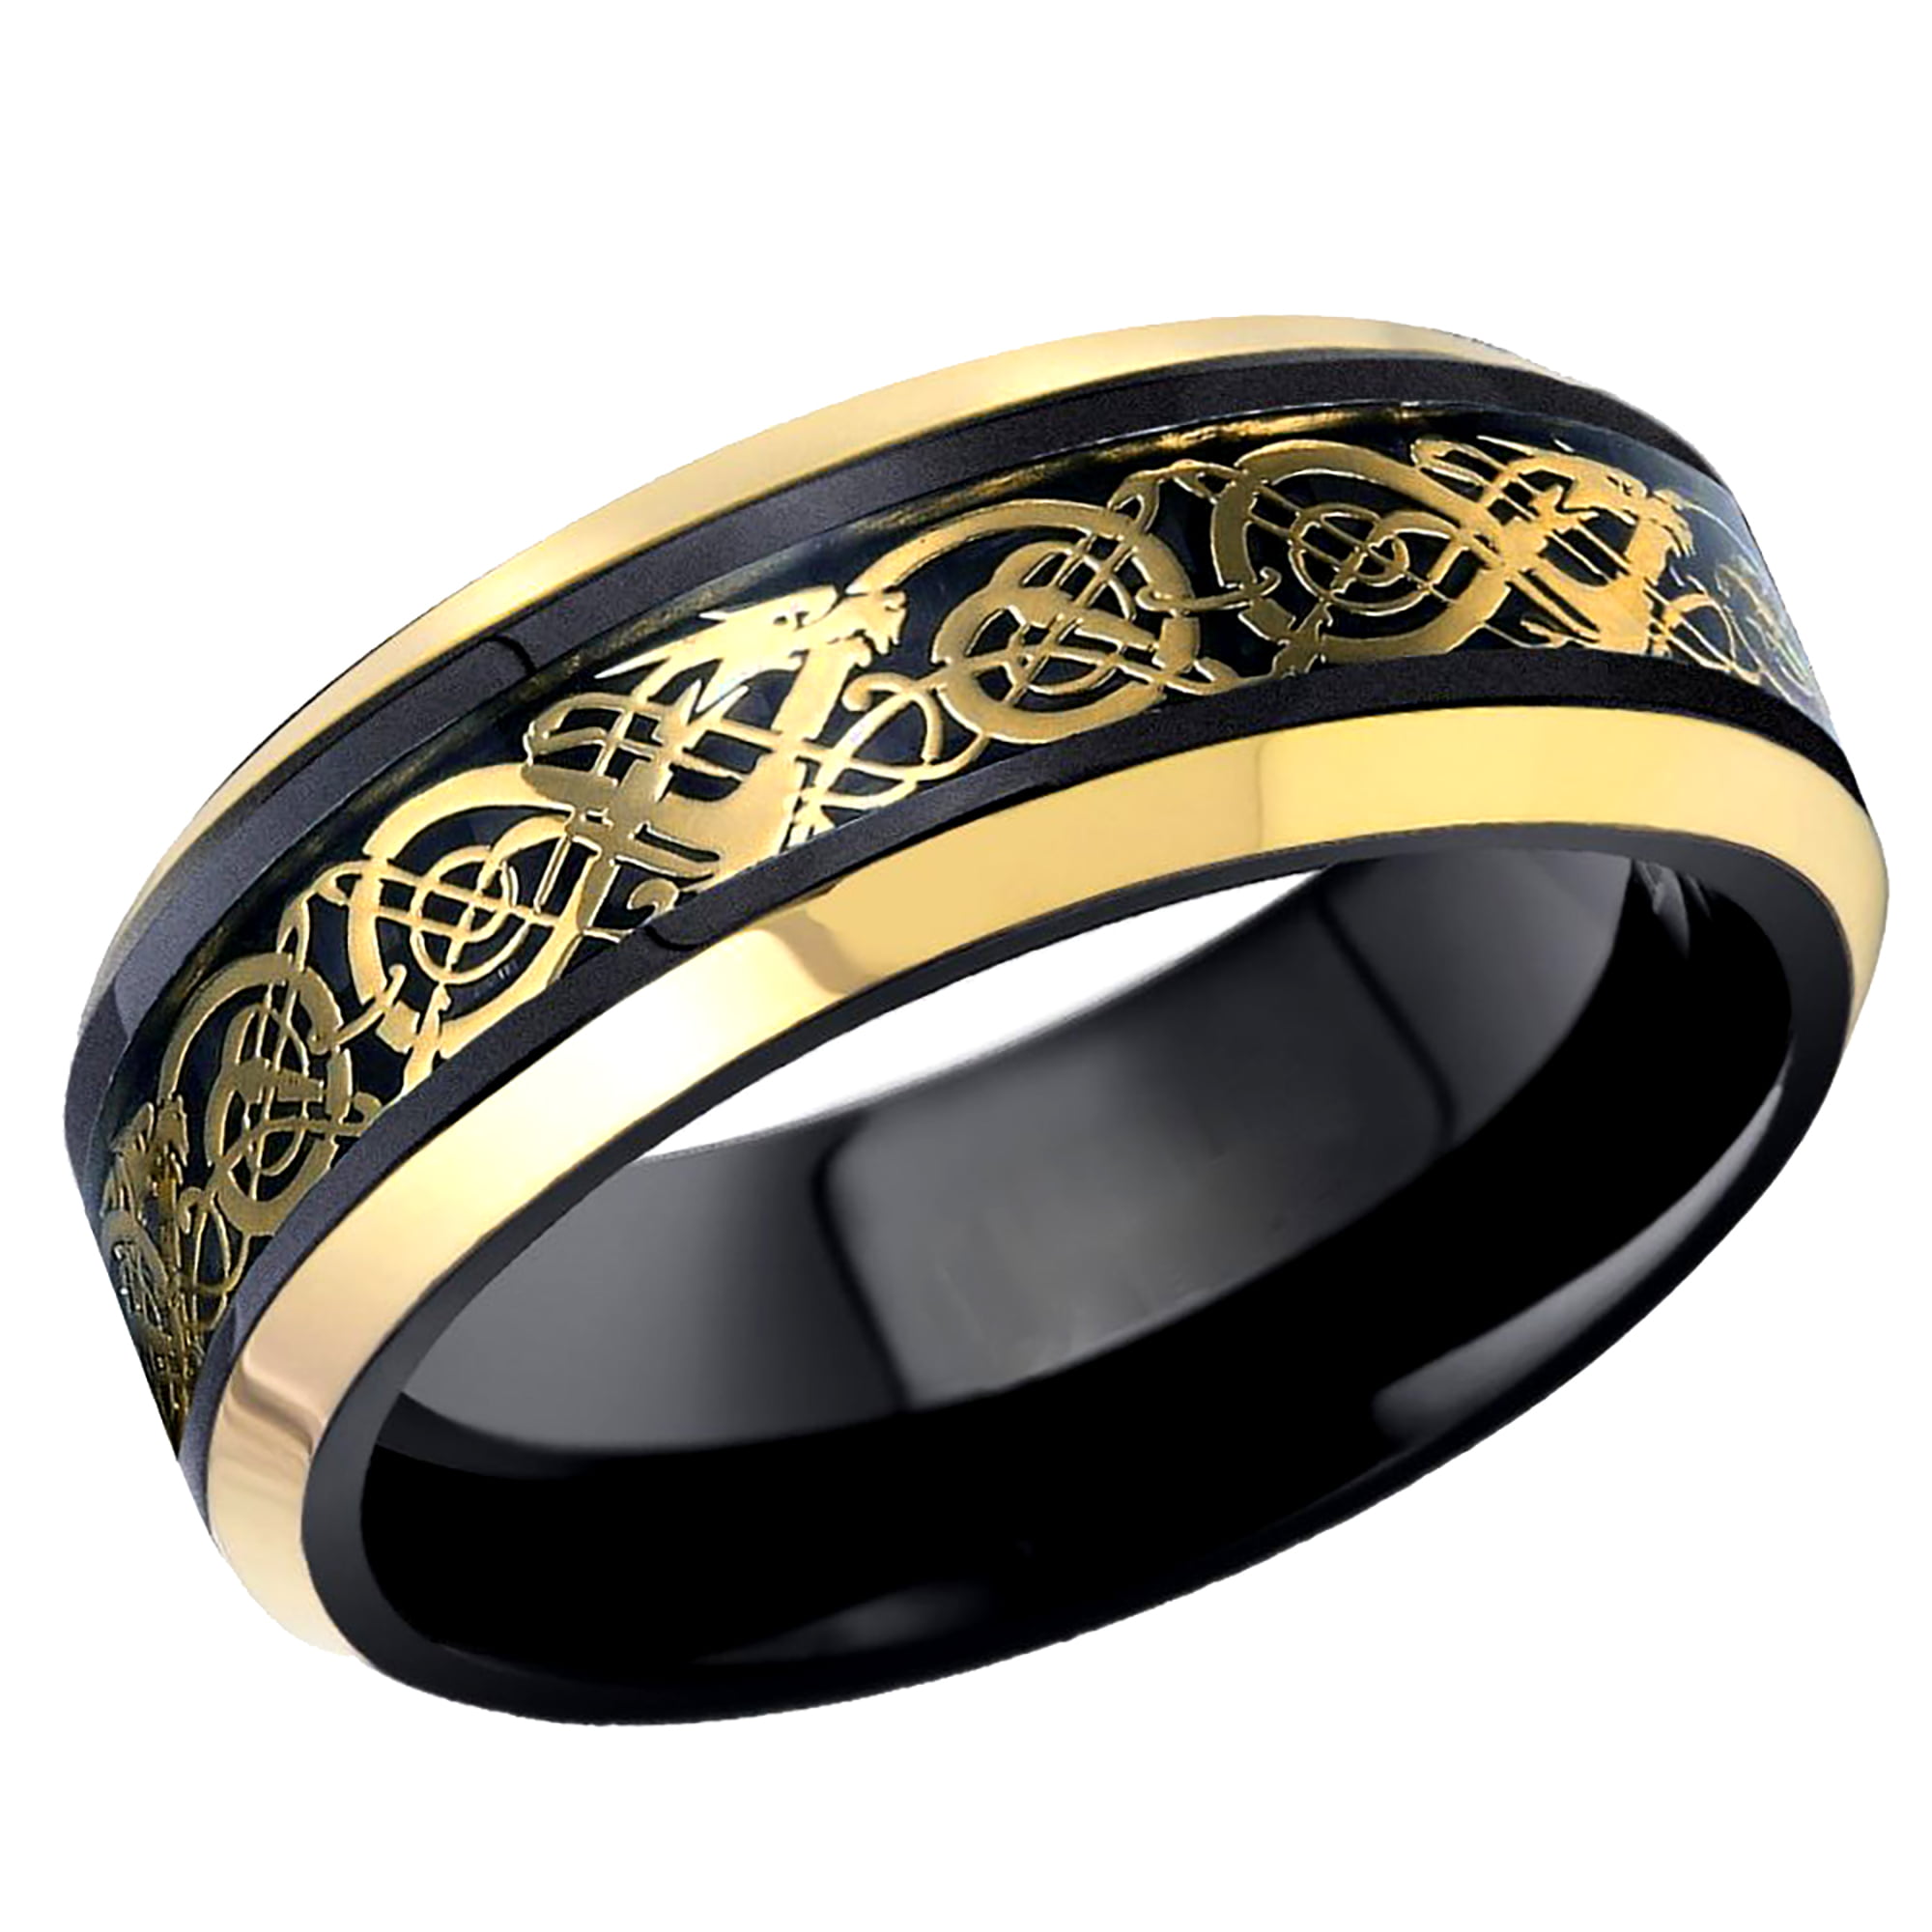 Men's Women's Tungsten Wedding Band Engagement Ring 8mm Two-tone Black ...